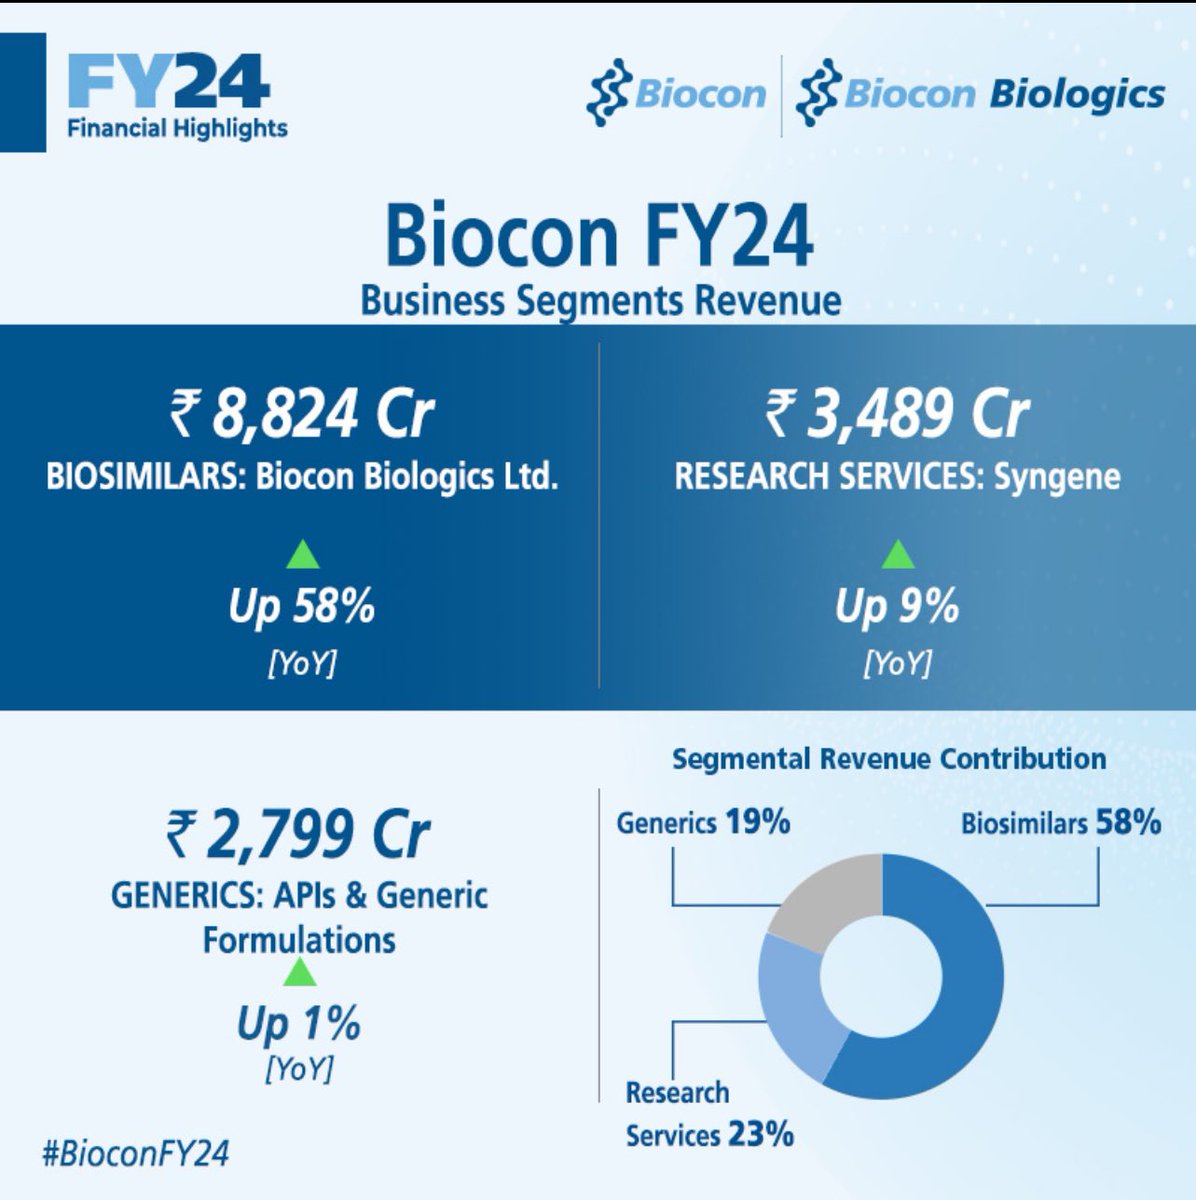 Biosimilars Revenue in FY24 Crosses USD 1 Bn, @BioconBiologics’ Revenue at Rs 8,824 Crore Up 58% (YoY)

RESEARCH SERVICES: Syngene
Revenue at Rs 3,489 Crore, Up 9% (YoY)

GENERICS: APIs & Generic Formulations Revenue at Rs 2,799 Crore, Up 1% (YoY)

Read more: